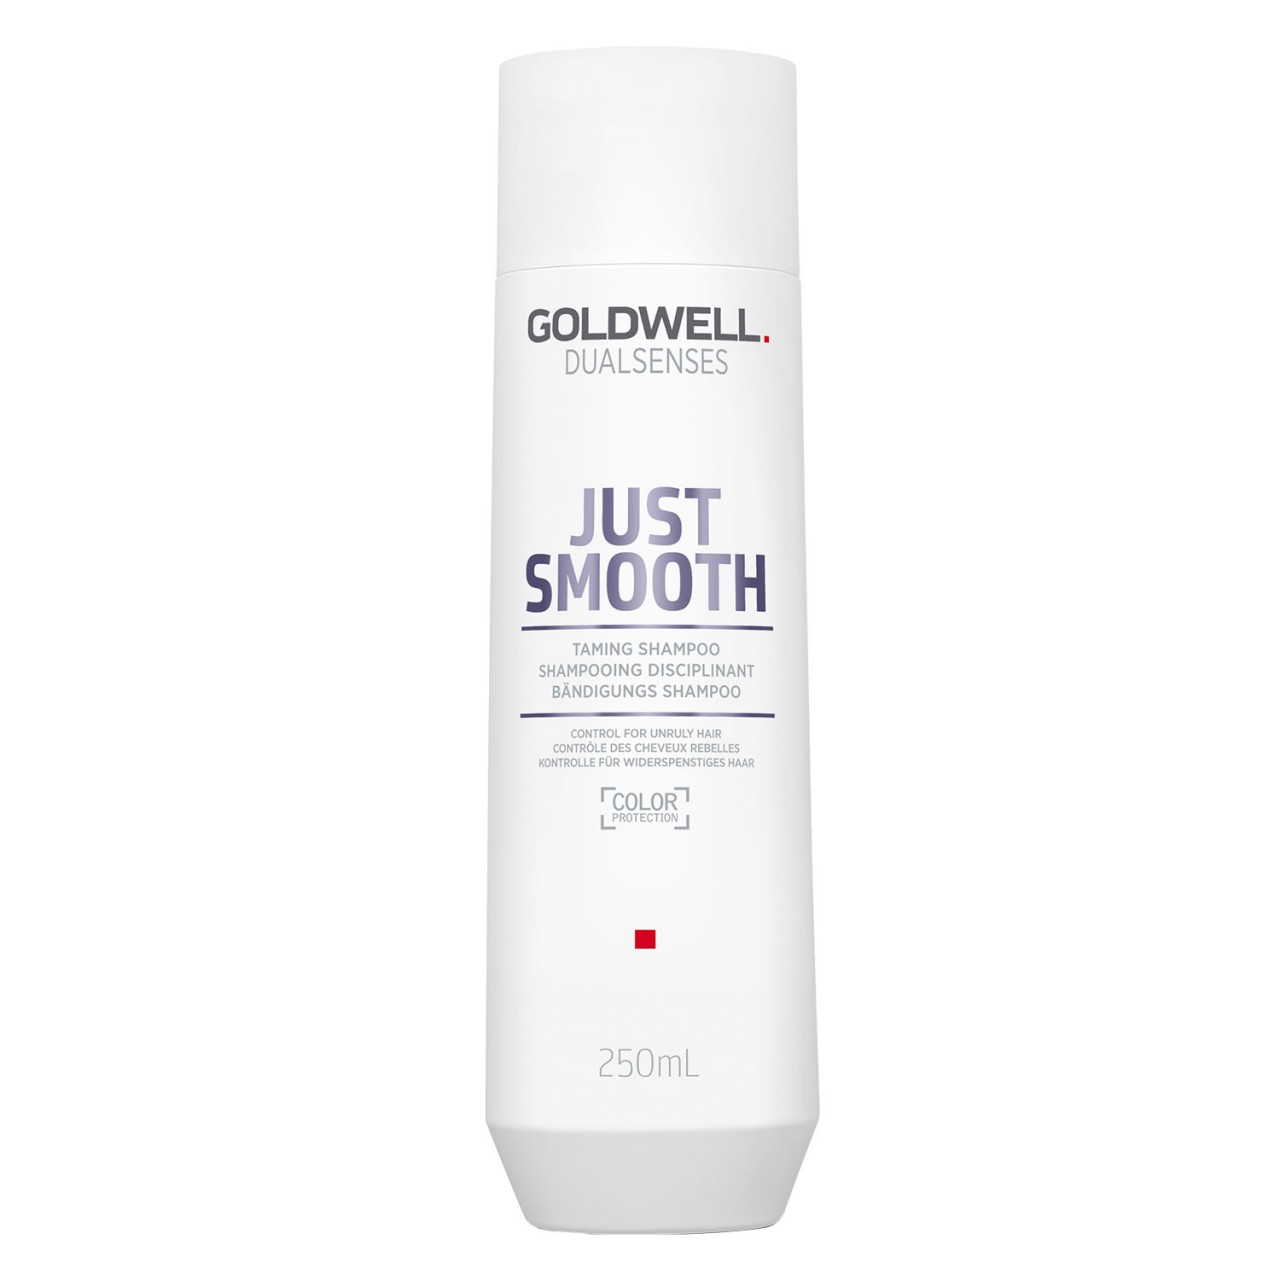 Dualsenses Just Smooth - Taming Shampoo von Goldwell